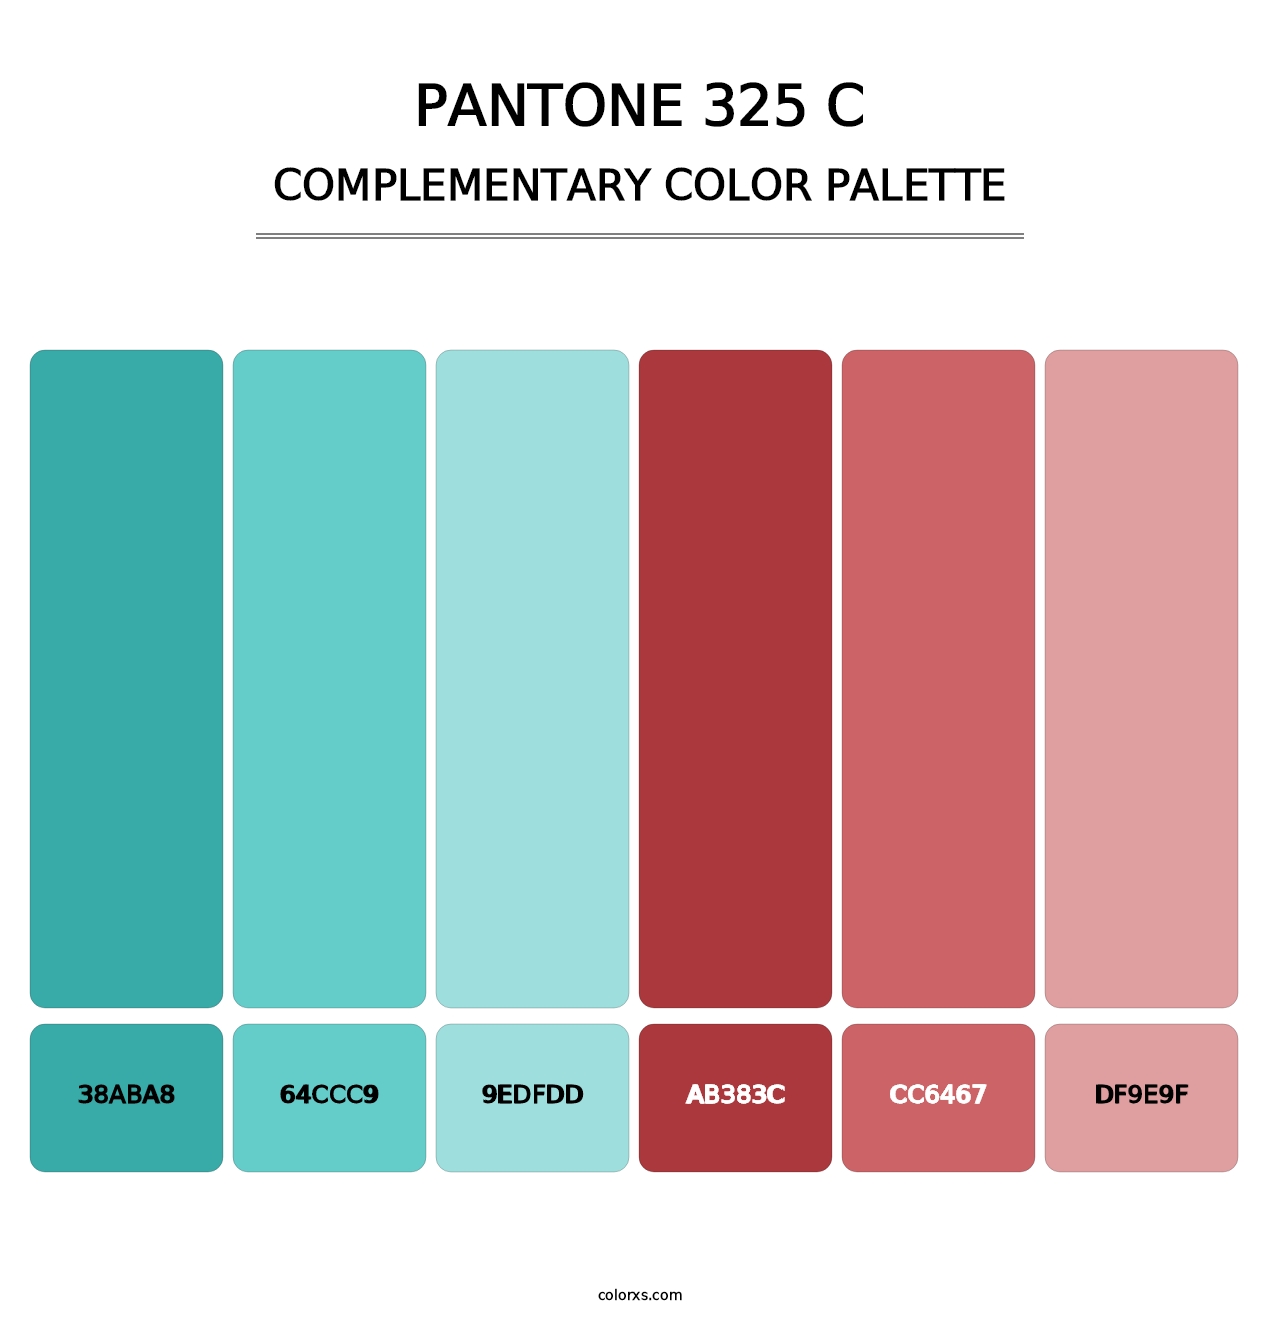 PANTONE 325 C - Complementary Color Palette